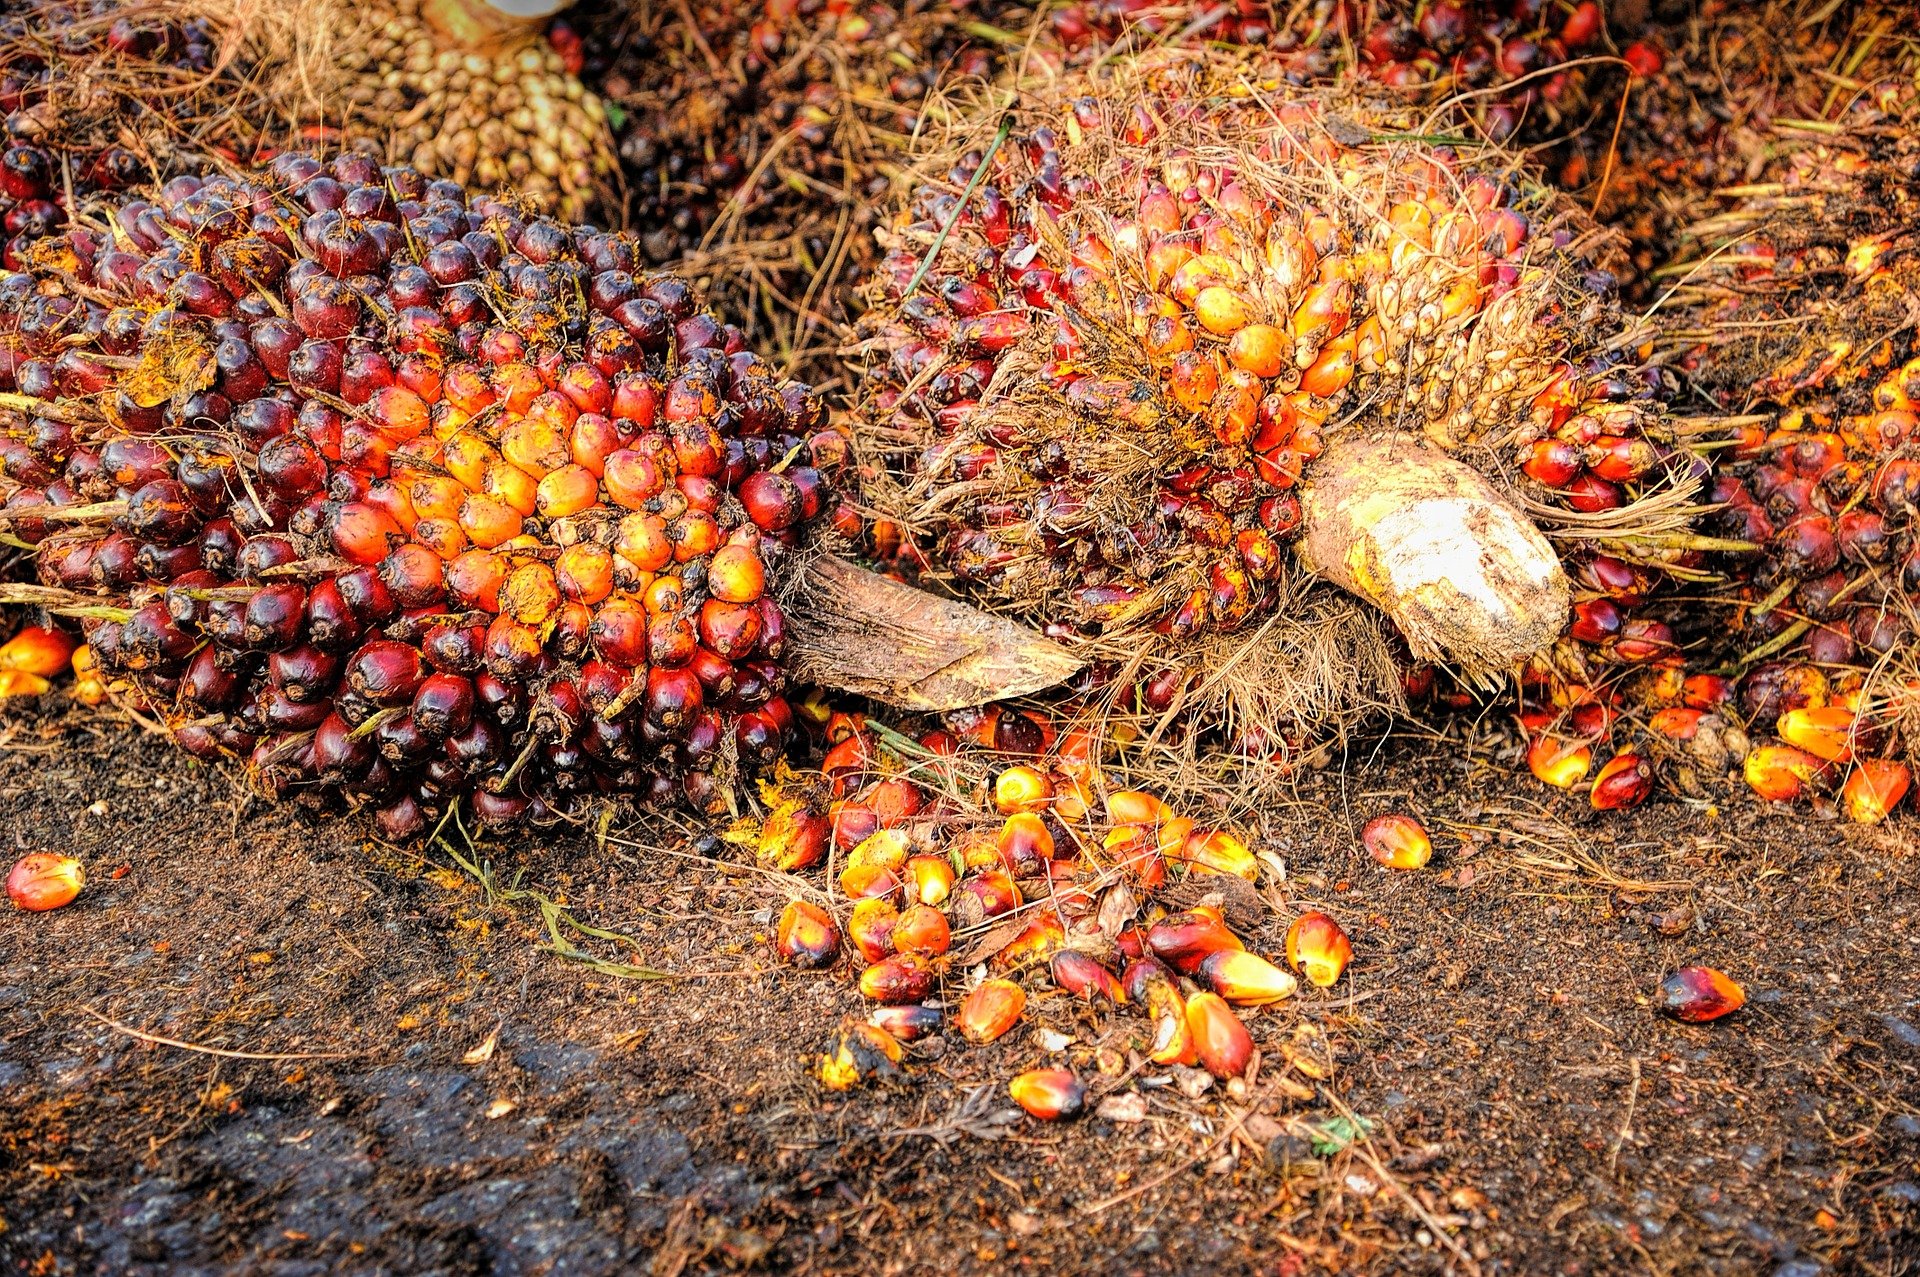 Indonesia urges European Union to treat palm oil fairly